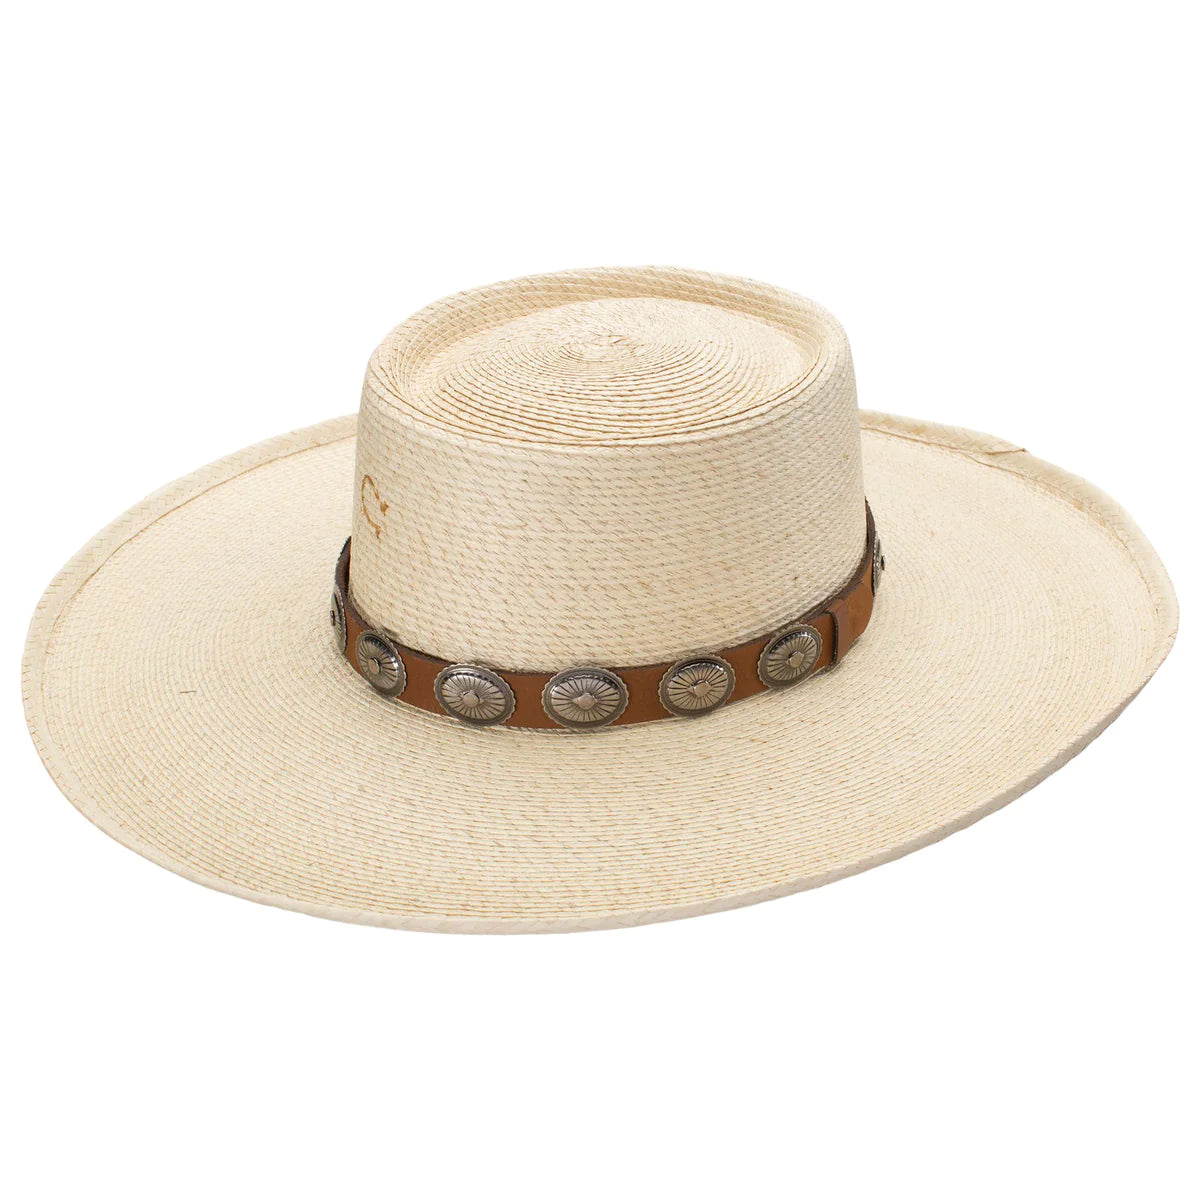 Charlie 1 Horse High Desert Flap Top Palm Fashion Hat - Natural